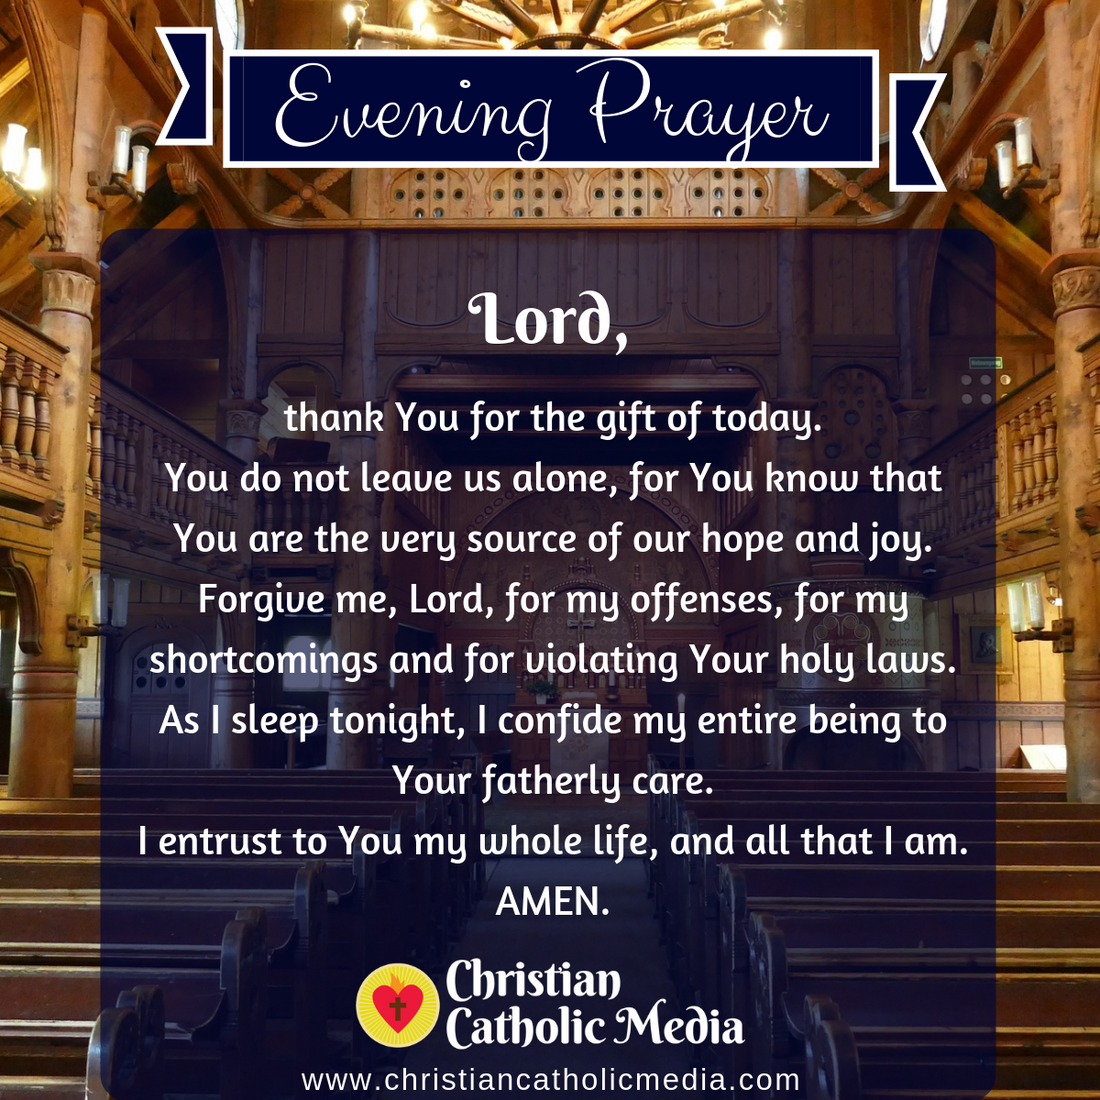 Evening Prayer Catholic Wednesday 12-18-2019